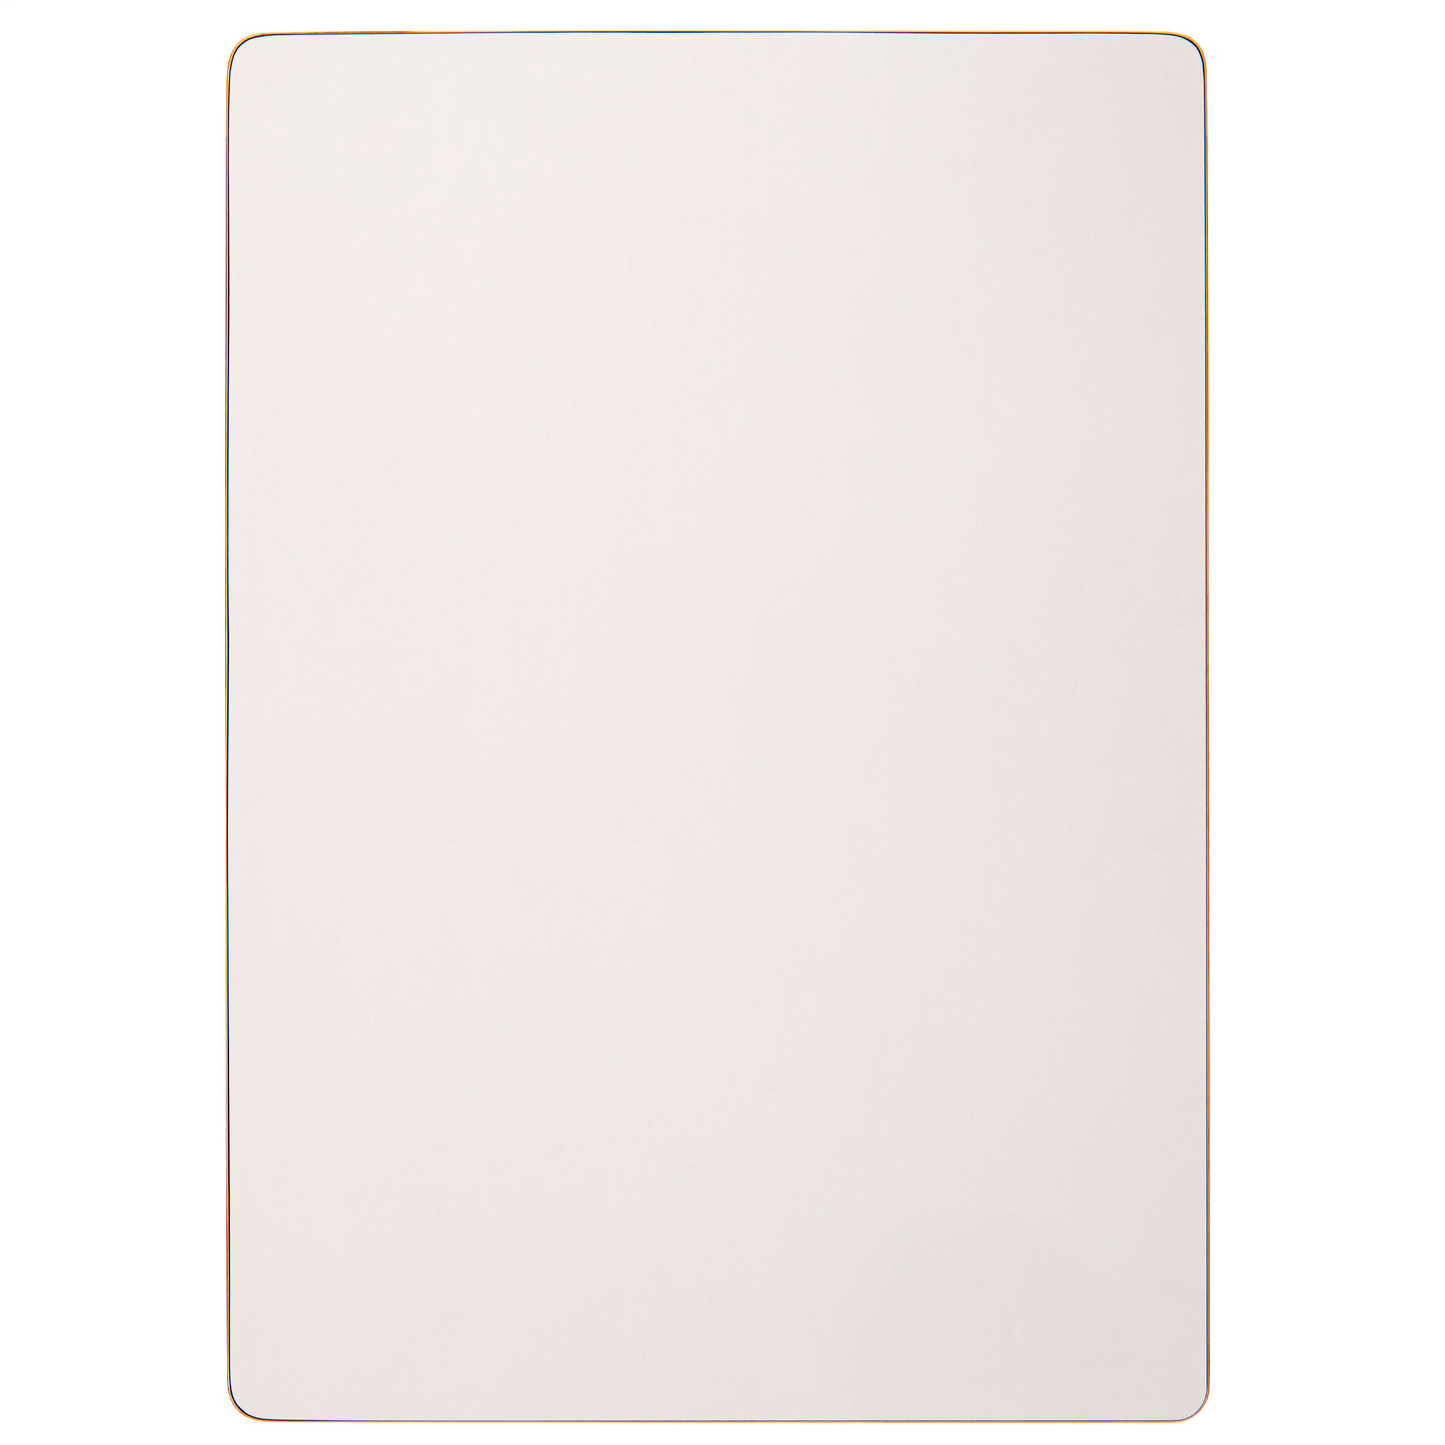 Rectangular table top: color white - Nienhuis AMI